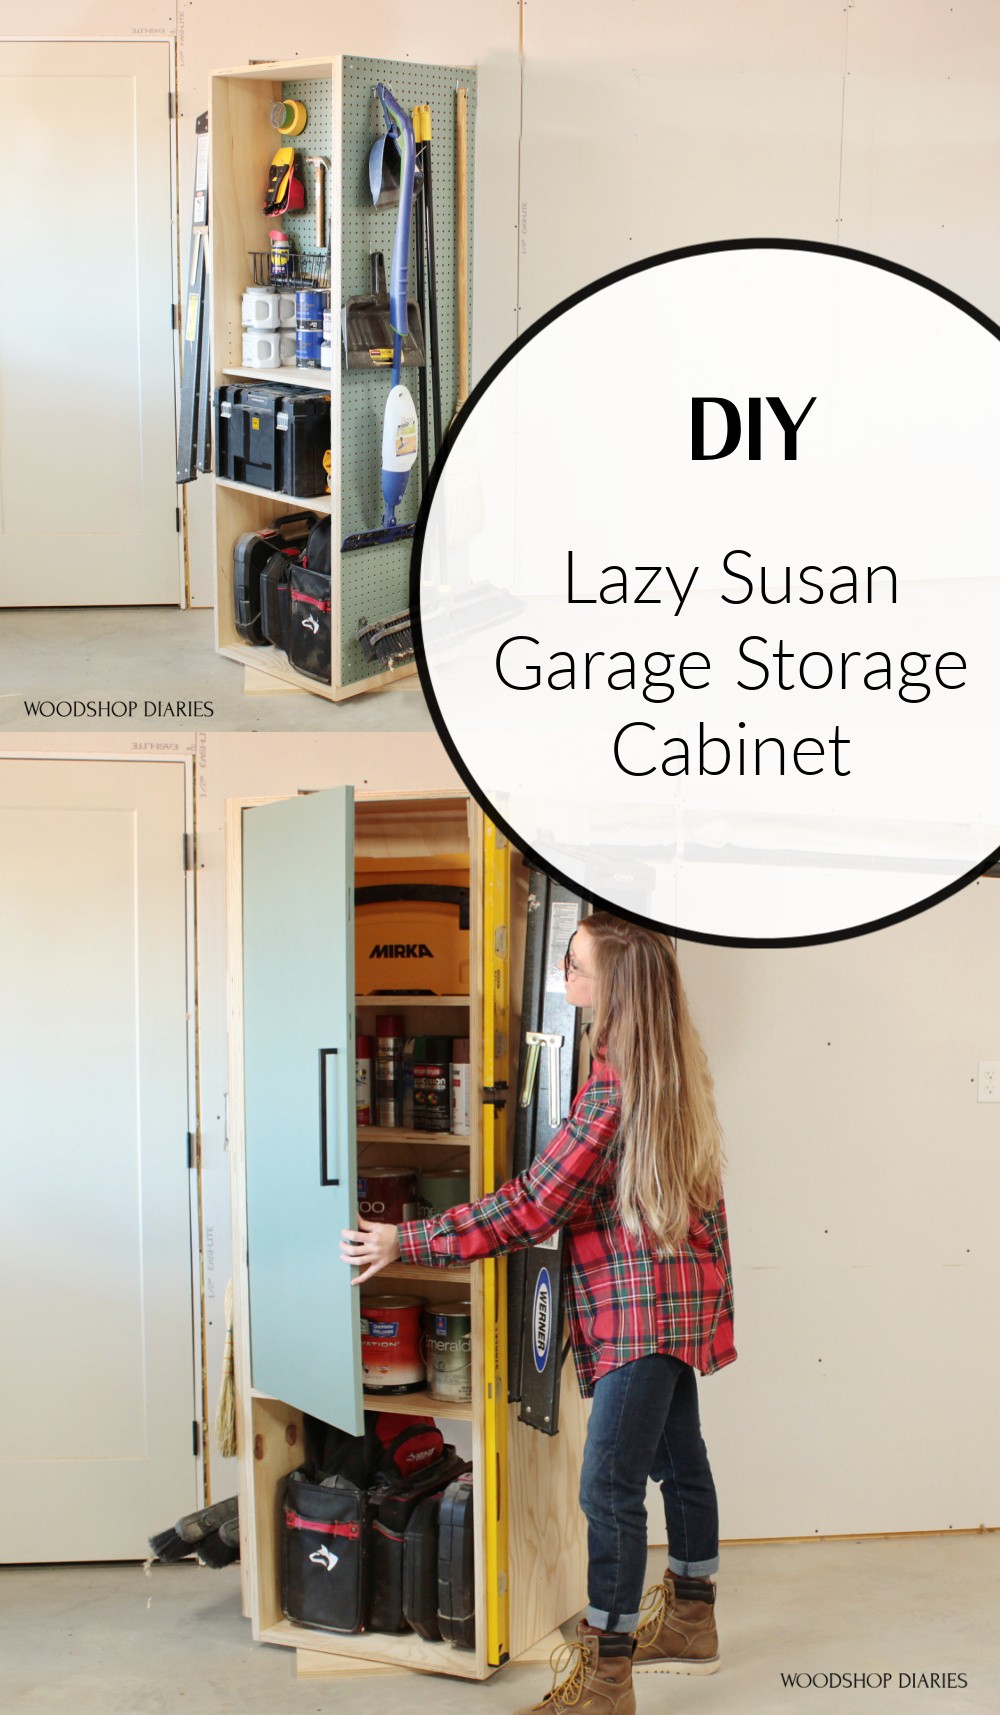 Lazy Susan DIY Garage Storage Cabinet--FREE PLANS!